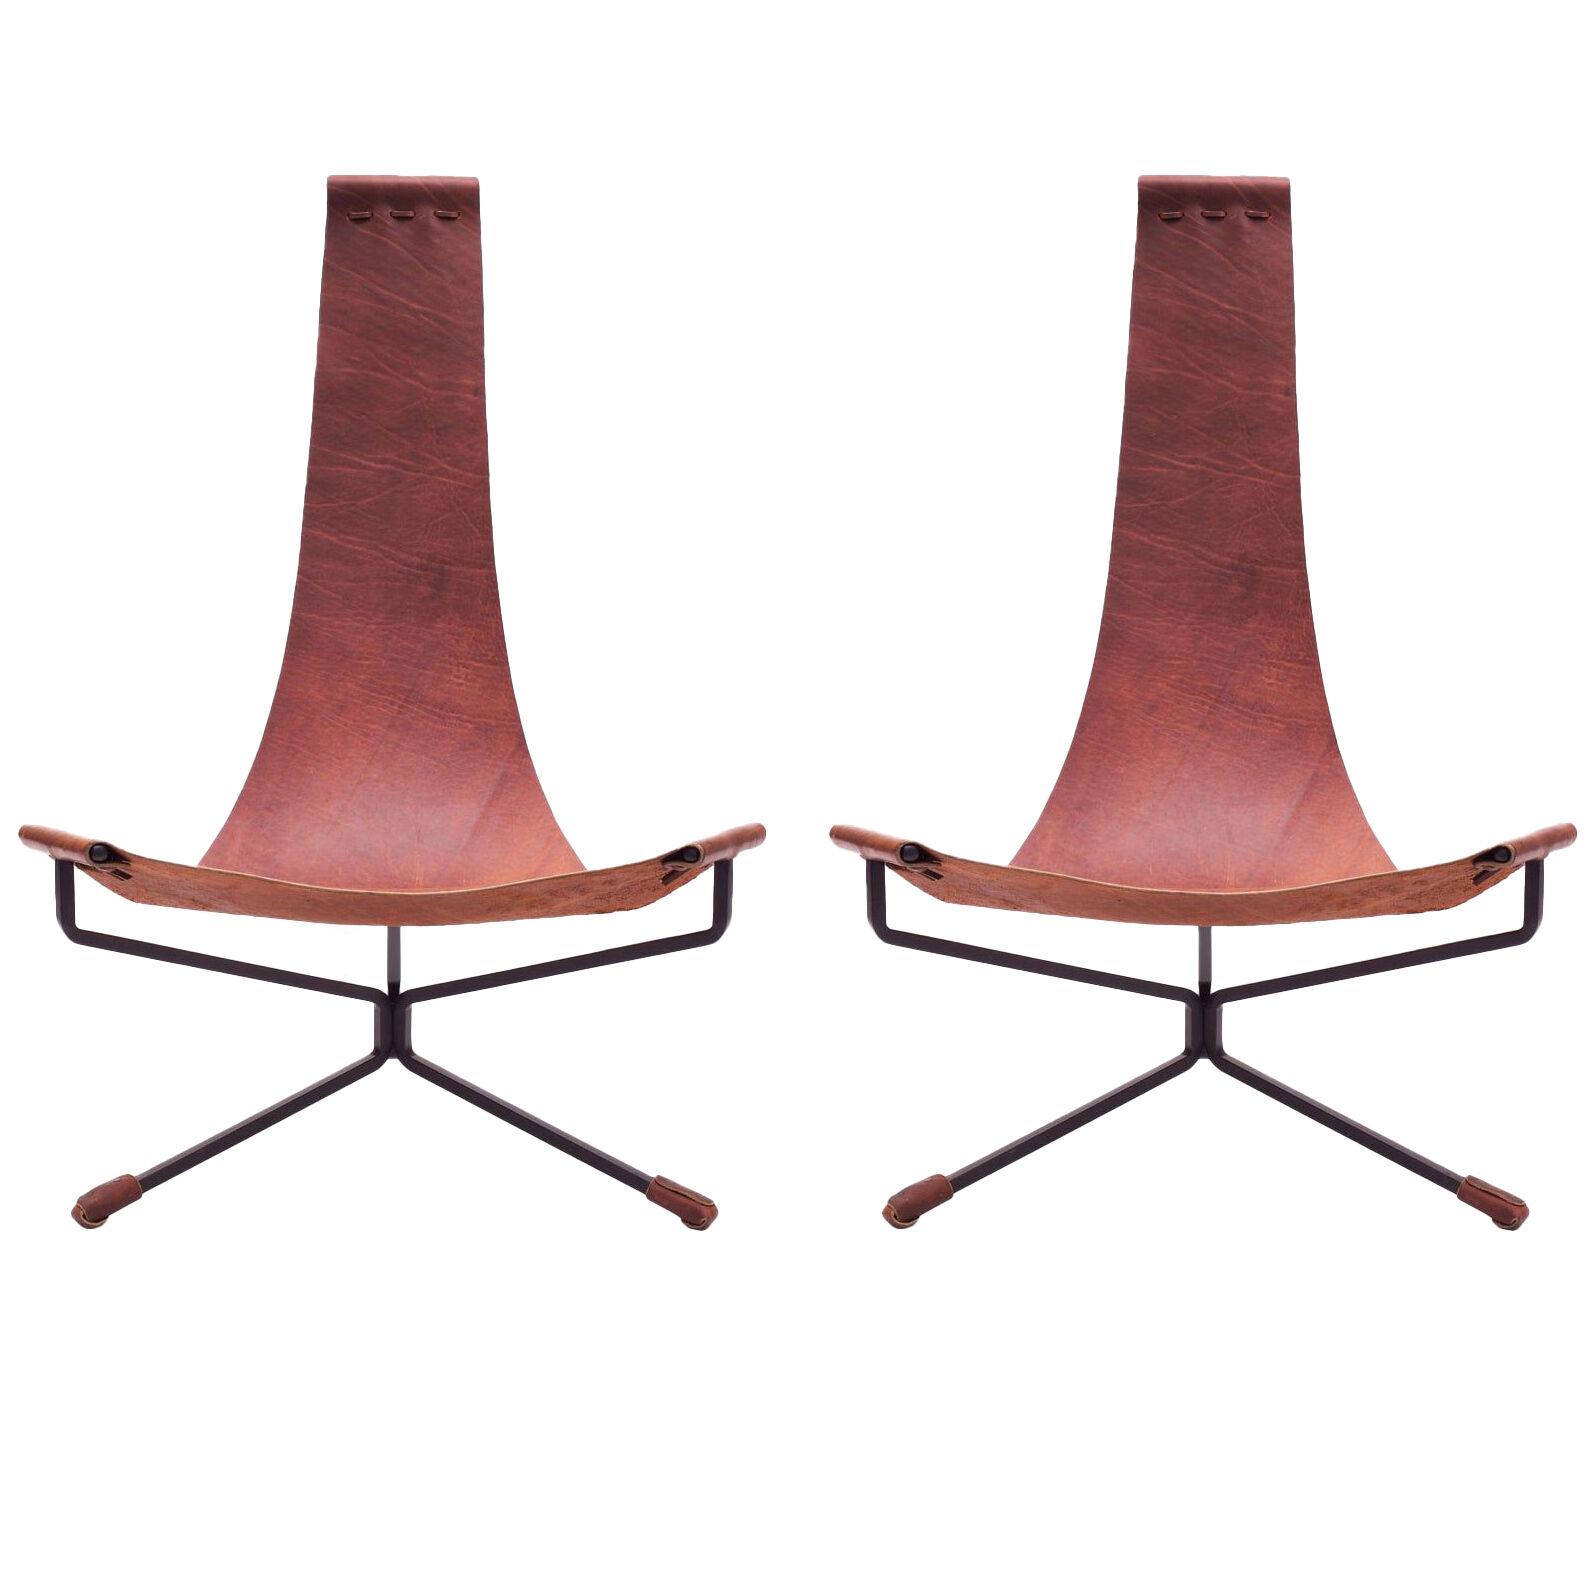 Pair of Dan Wenger Lotus Chair in Leather and Metal